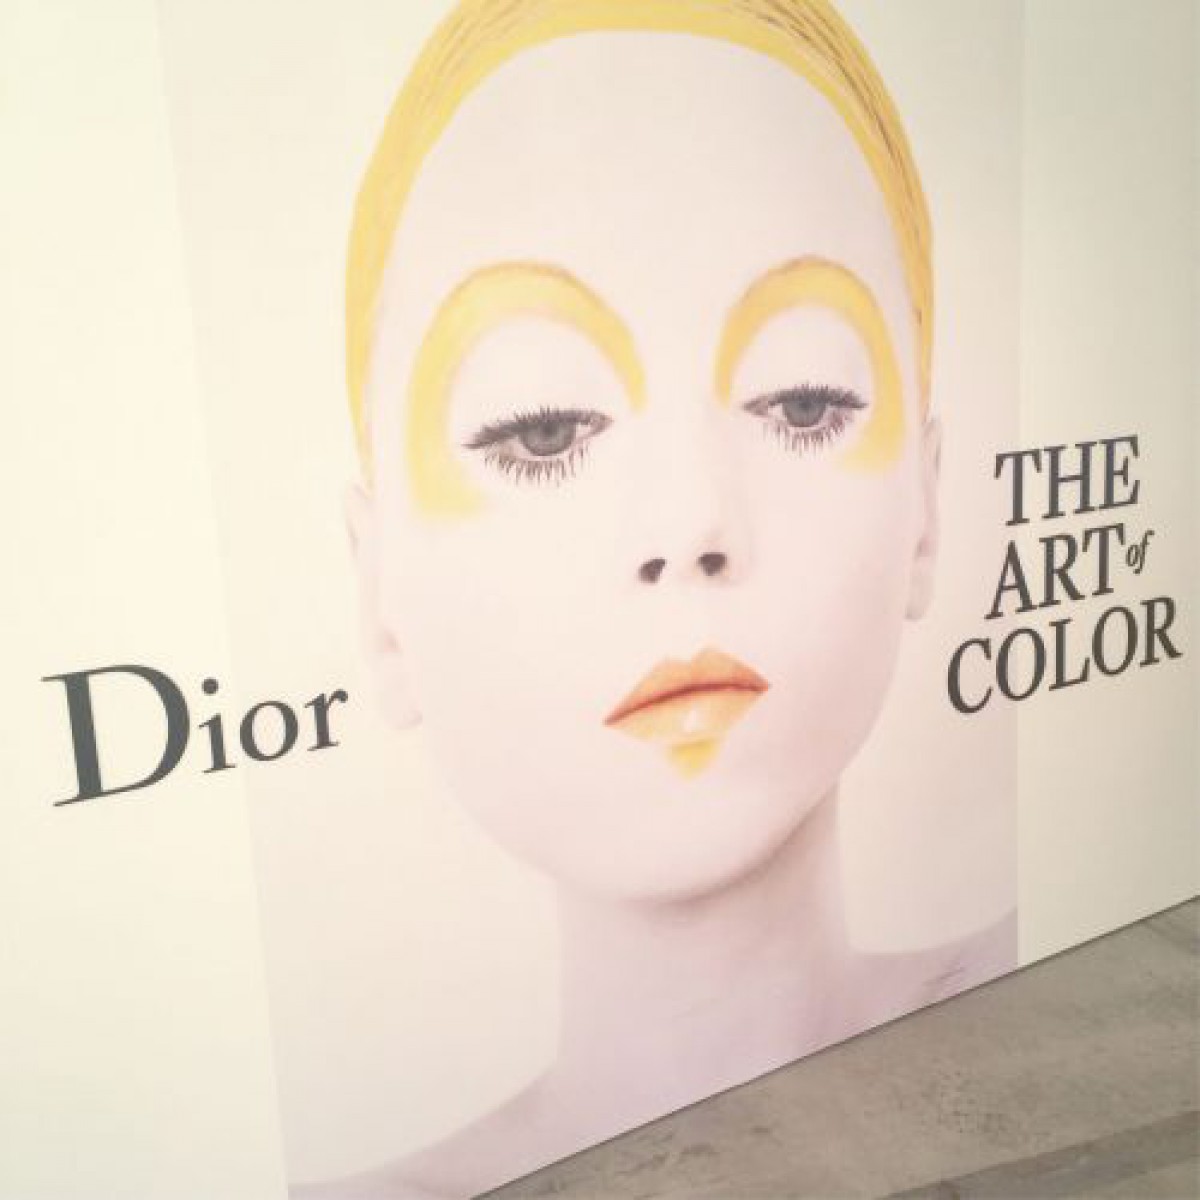 《Dior》アート オブ カラー展へ★